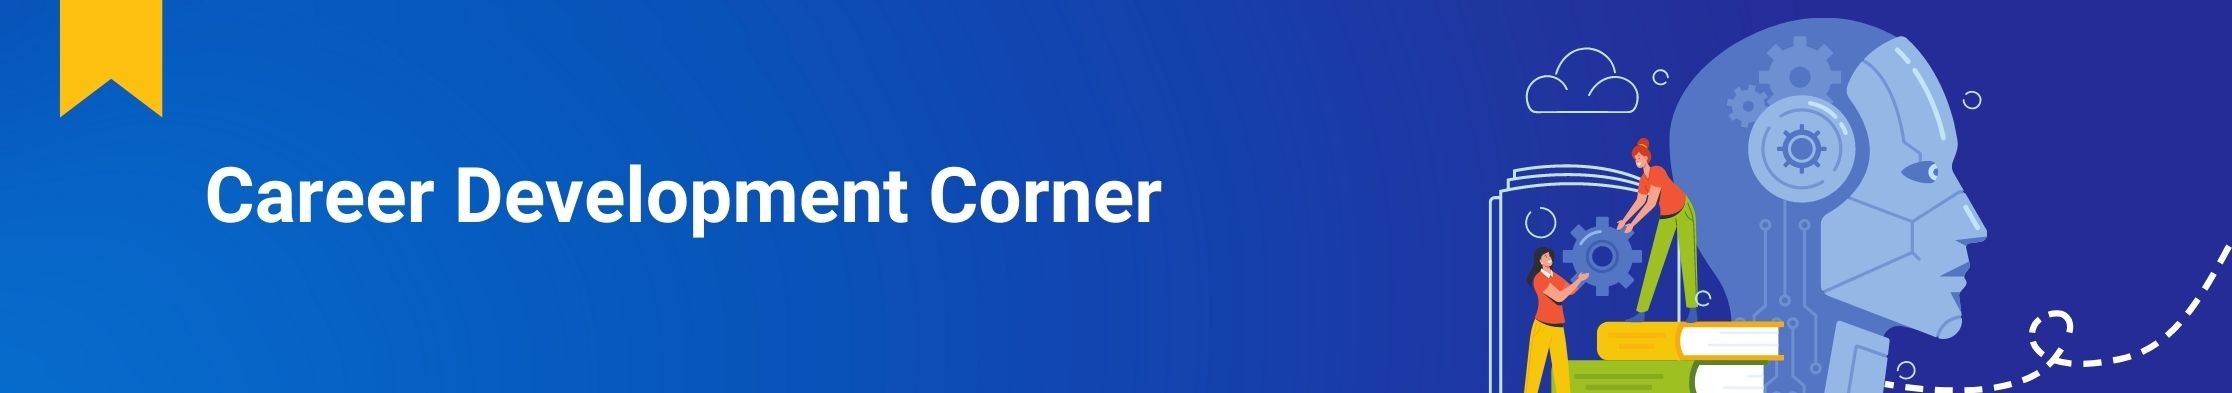 Career Development Corner Section - Newsletter - Data and AI